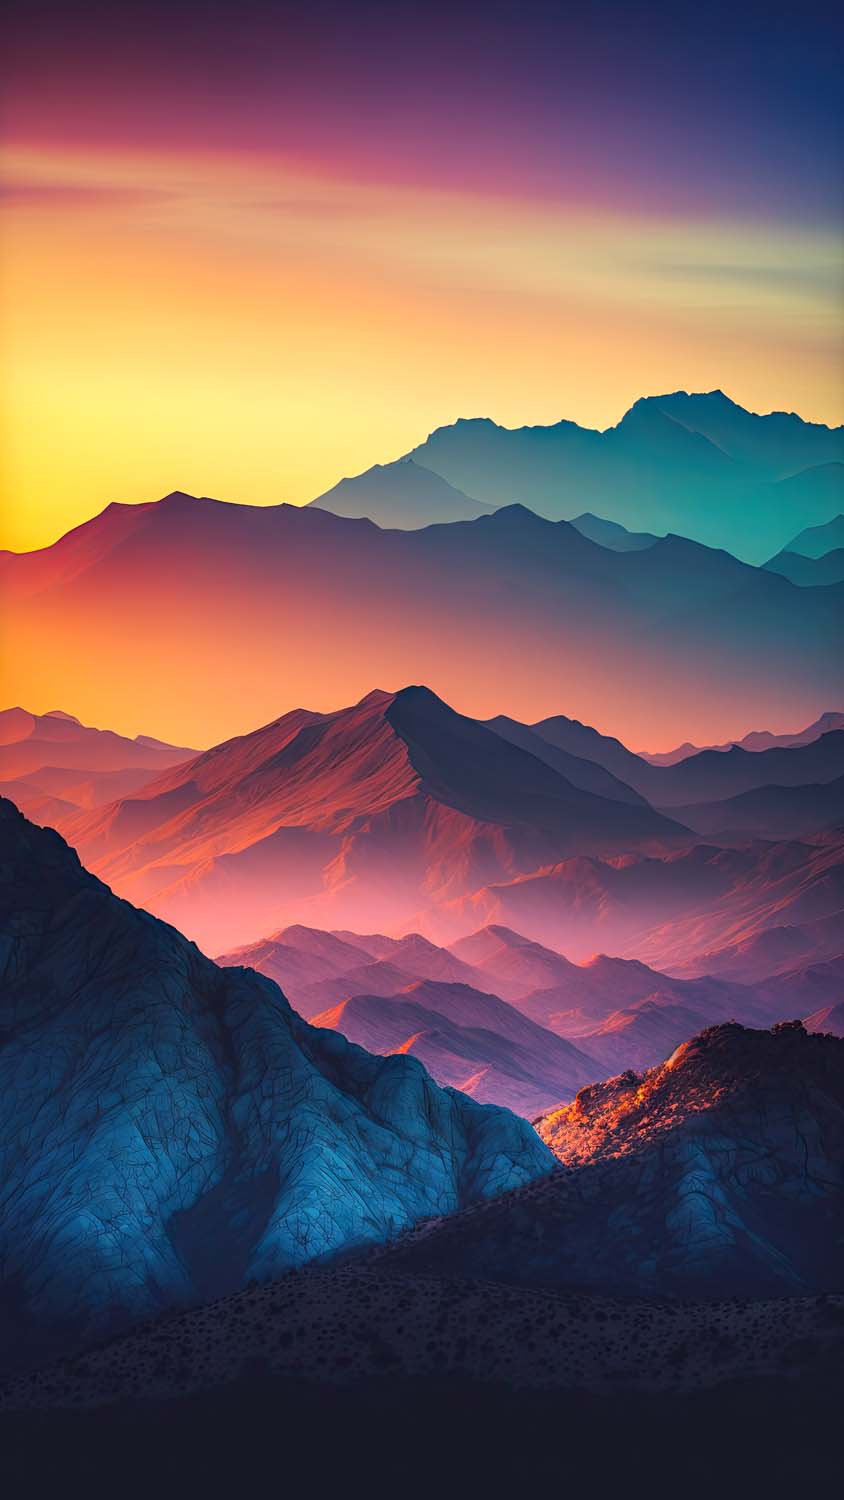 Morning Mountains iPhone Wallpaper HD